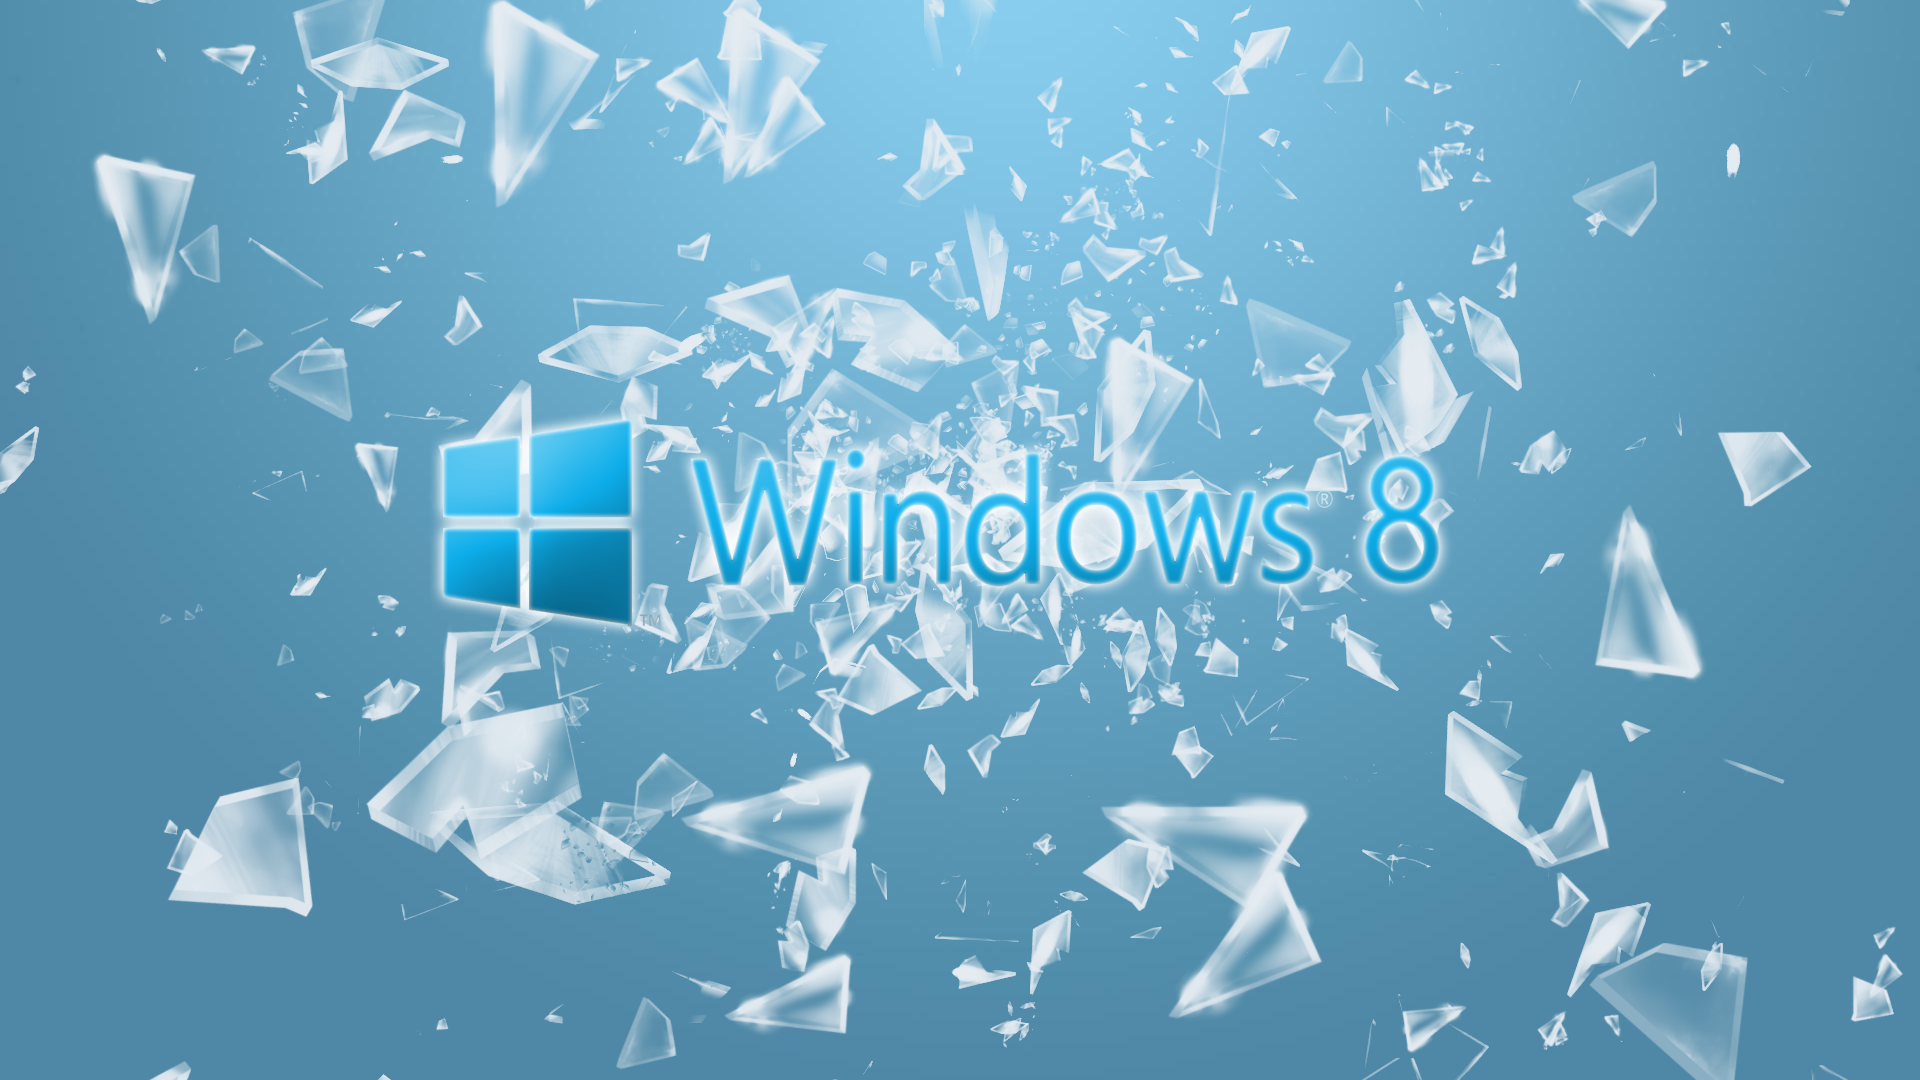 Windows 8 Wallpaper Hd 3d 1080p Wallpaper idwallpics.com